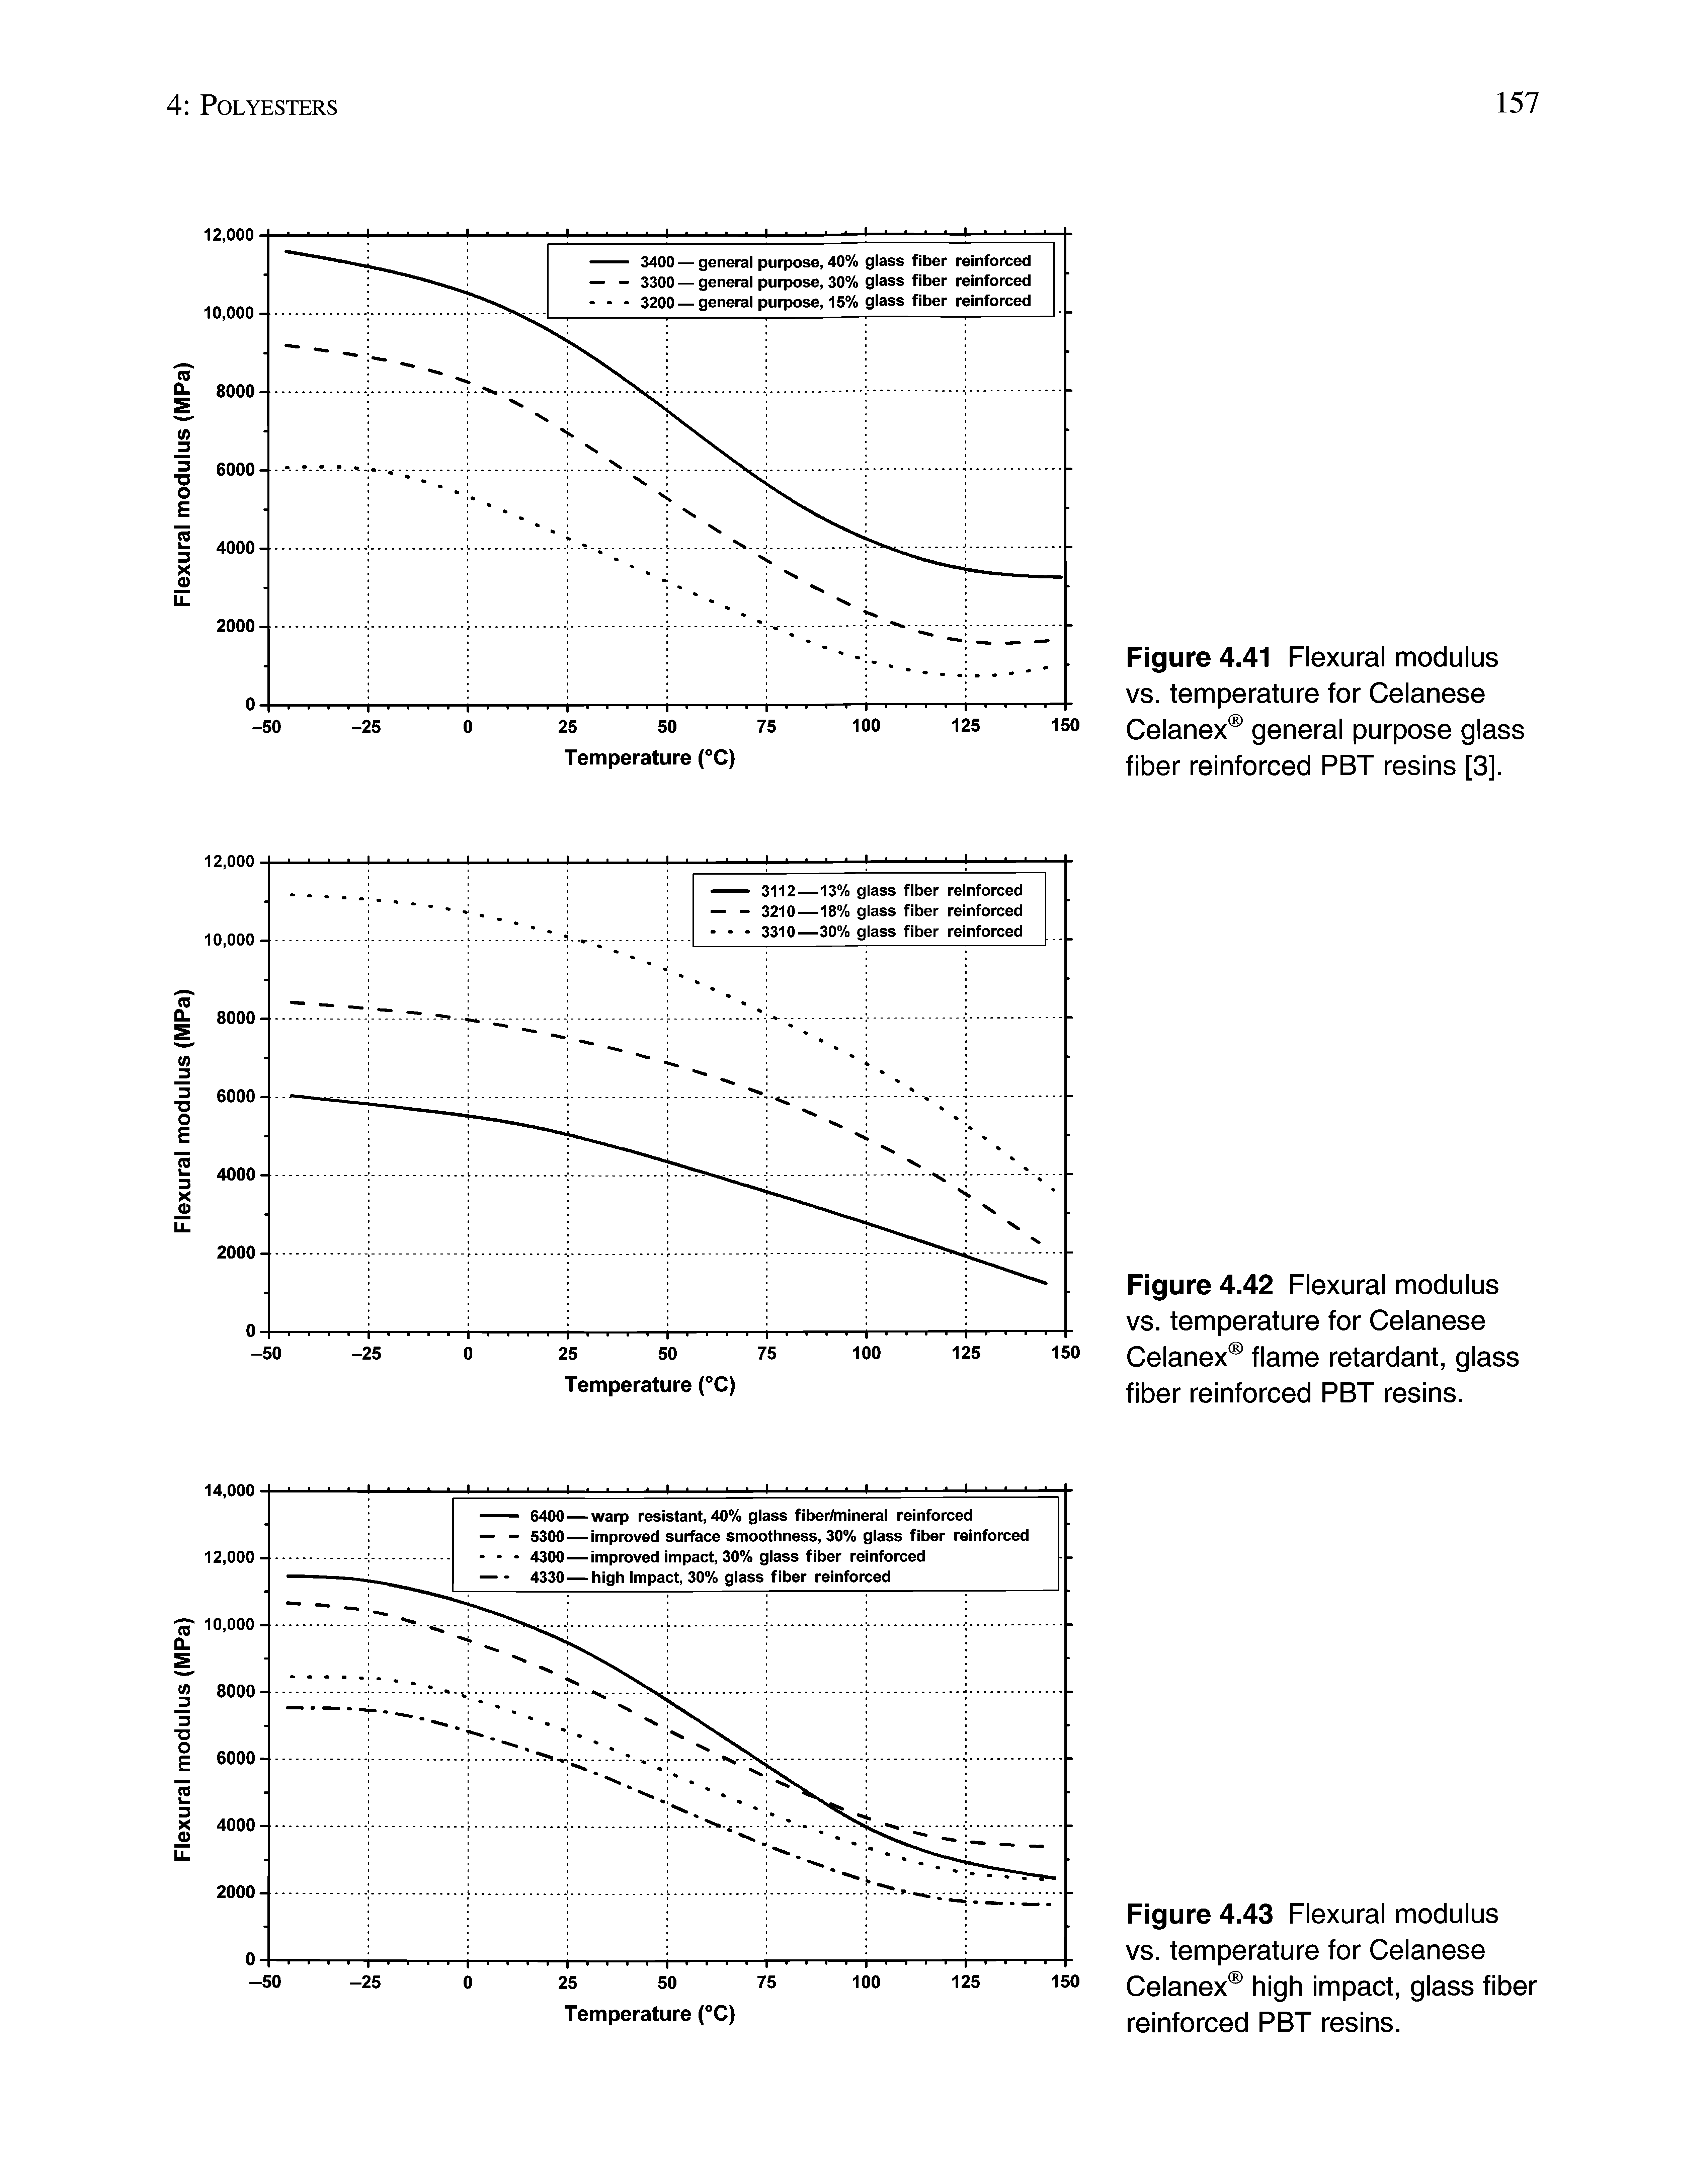 Figure 4.42 Flexural modulus vs. temperature for Celanese Celanex flame retardant, glass fiber reinforced PBT resins.